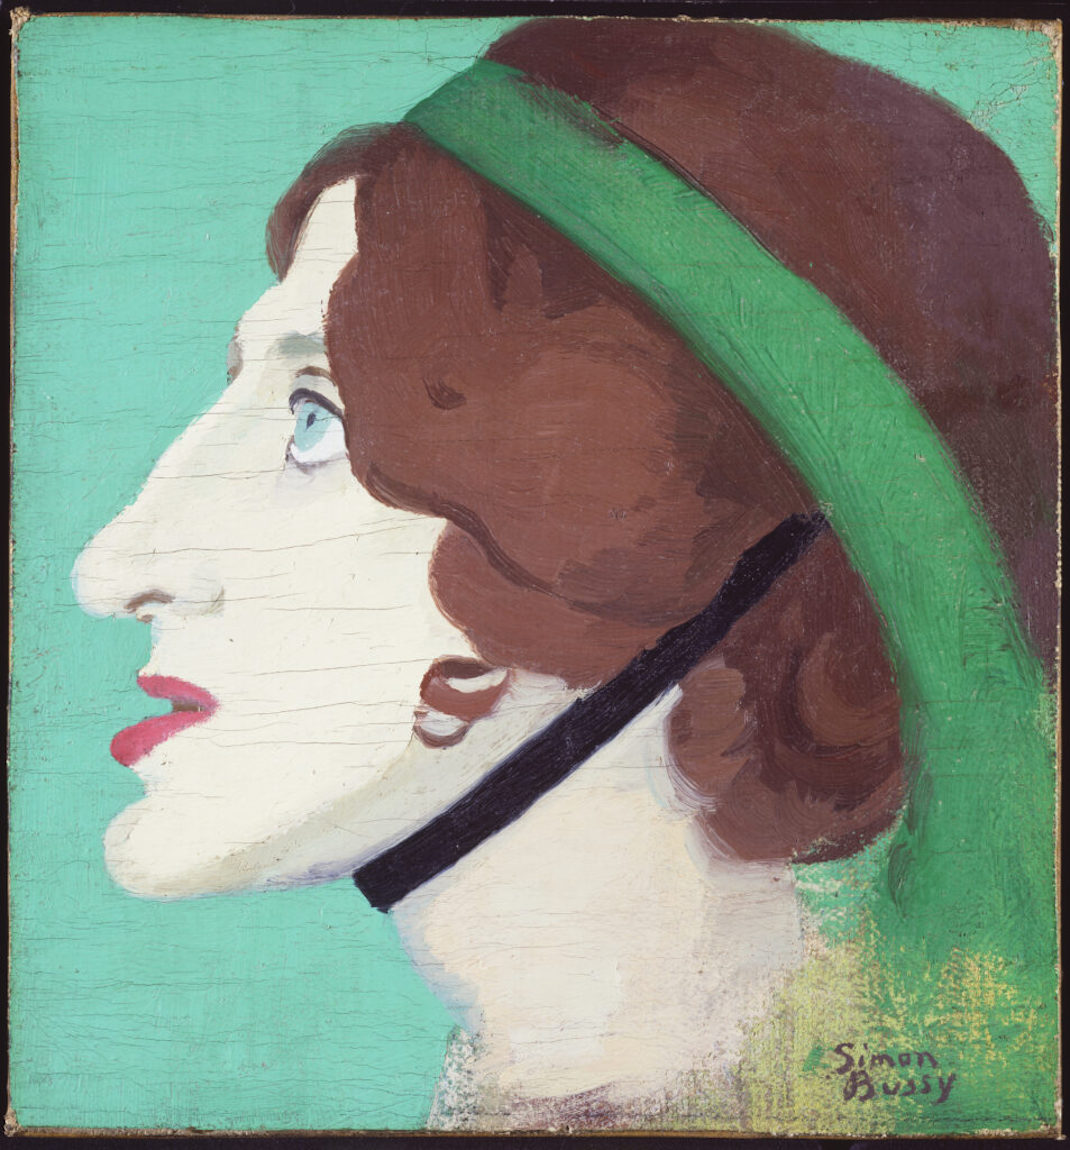 Simon Bussy -Πορτρέτο της Lady Ottoline Morrell (1920)